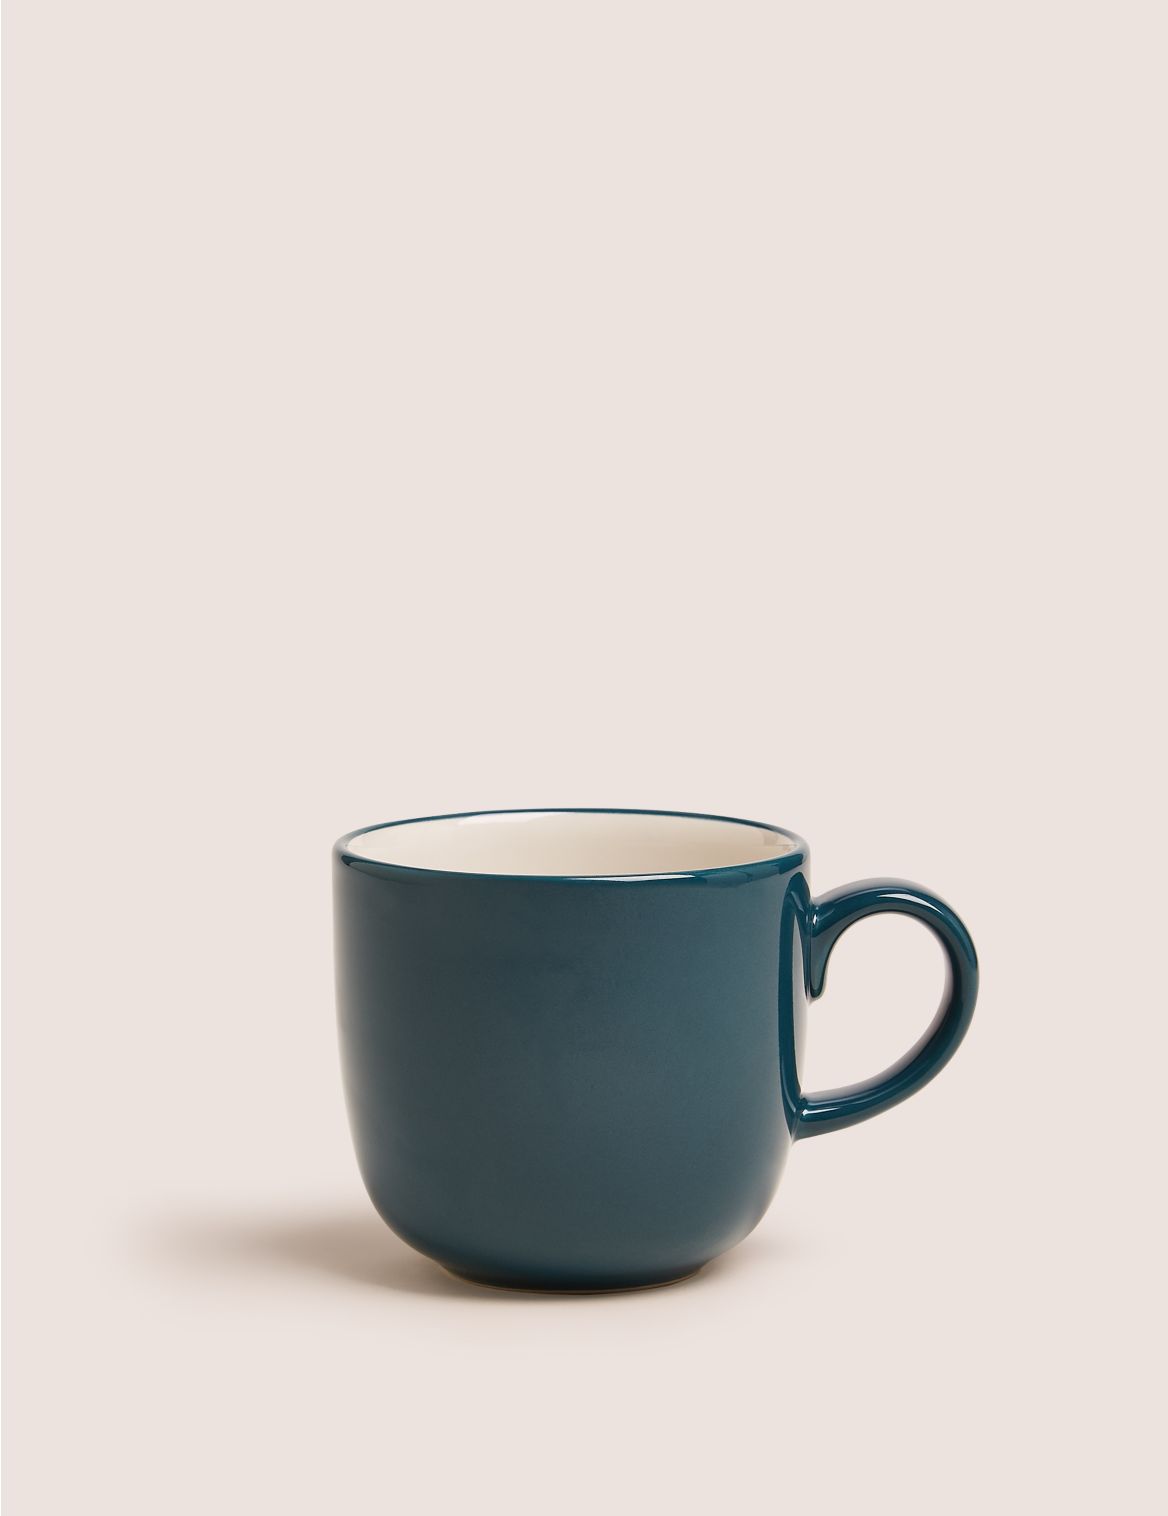 Image of Tribeca Small Mug green